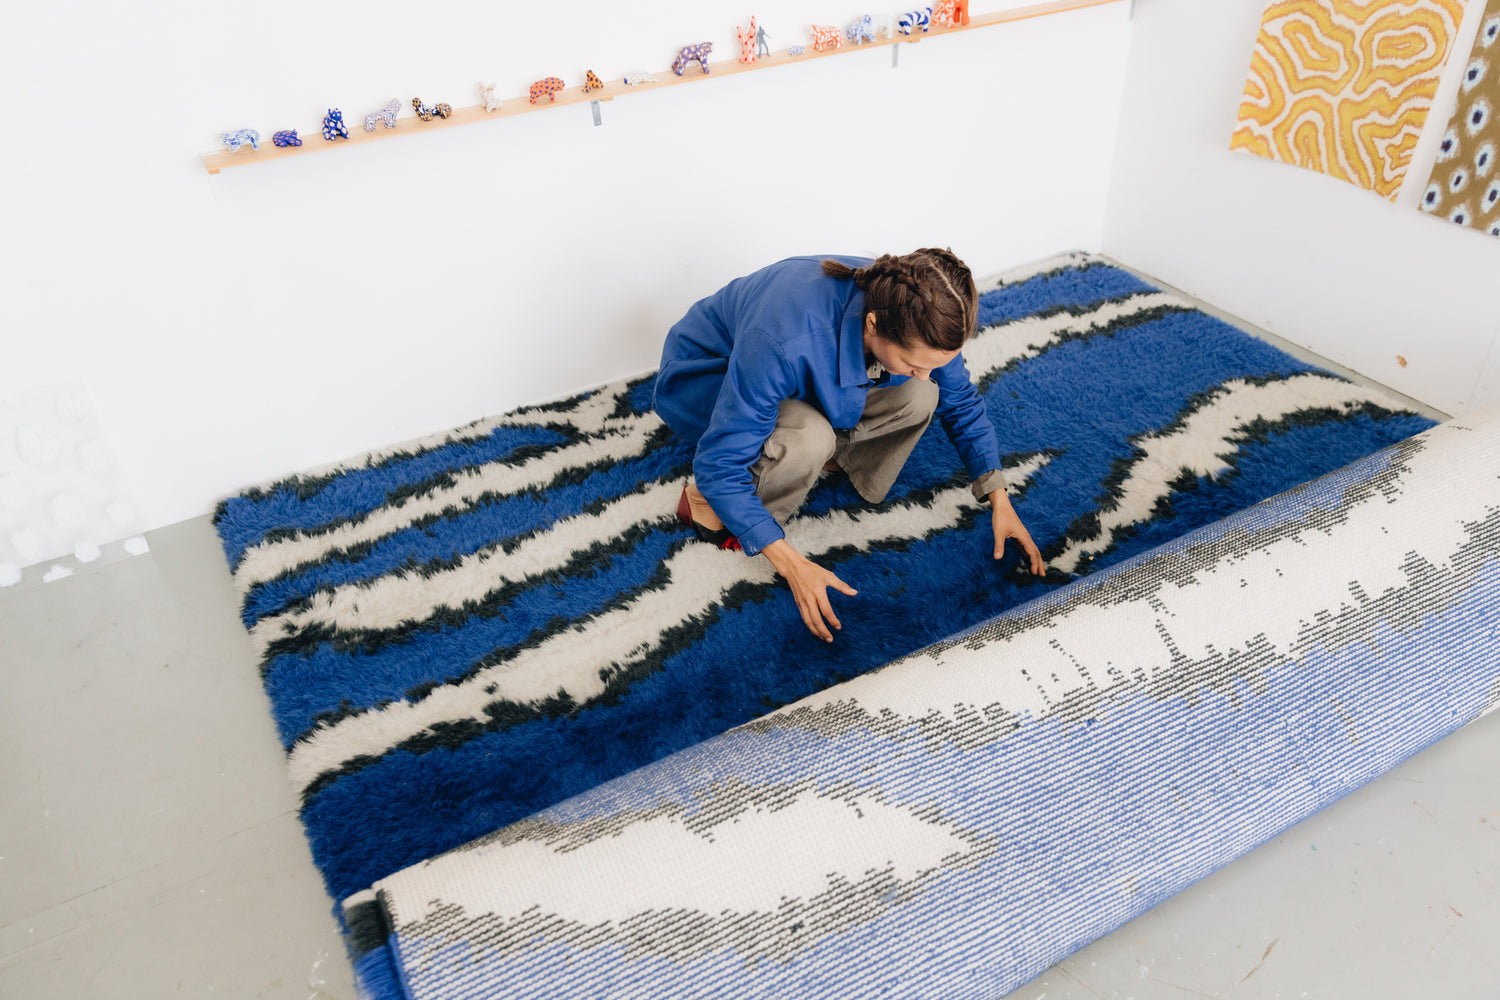 Designer Siri Carlén rolls out a Monster Rug in Ultramarine Blue / Off-White onto the floor.